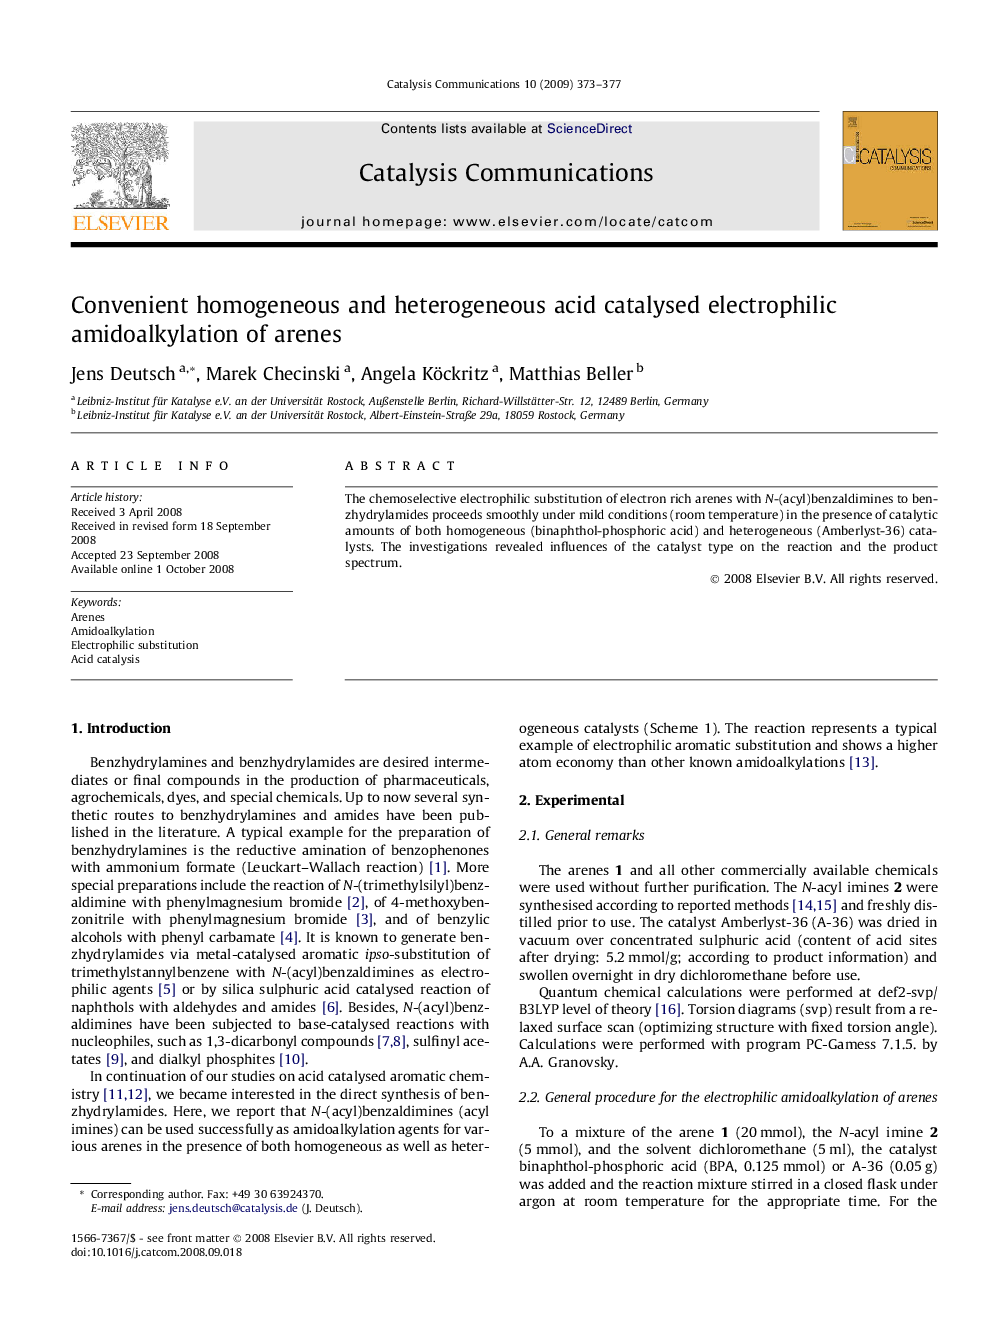 Convenient homogeneous and heterogeneous acid catalysed electrophilic amidoalkylation of arenes